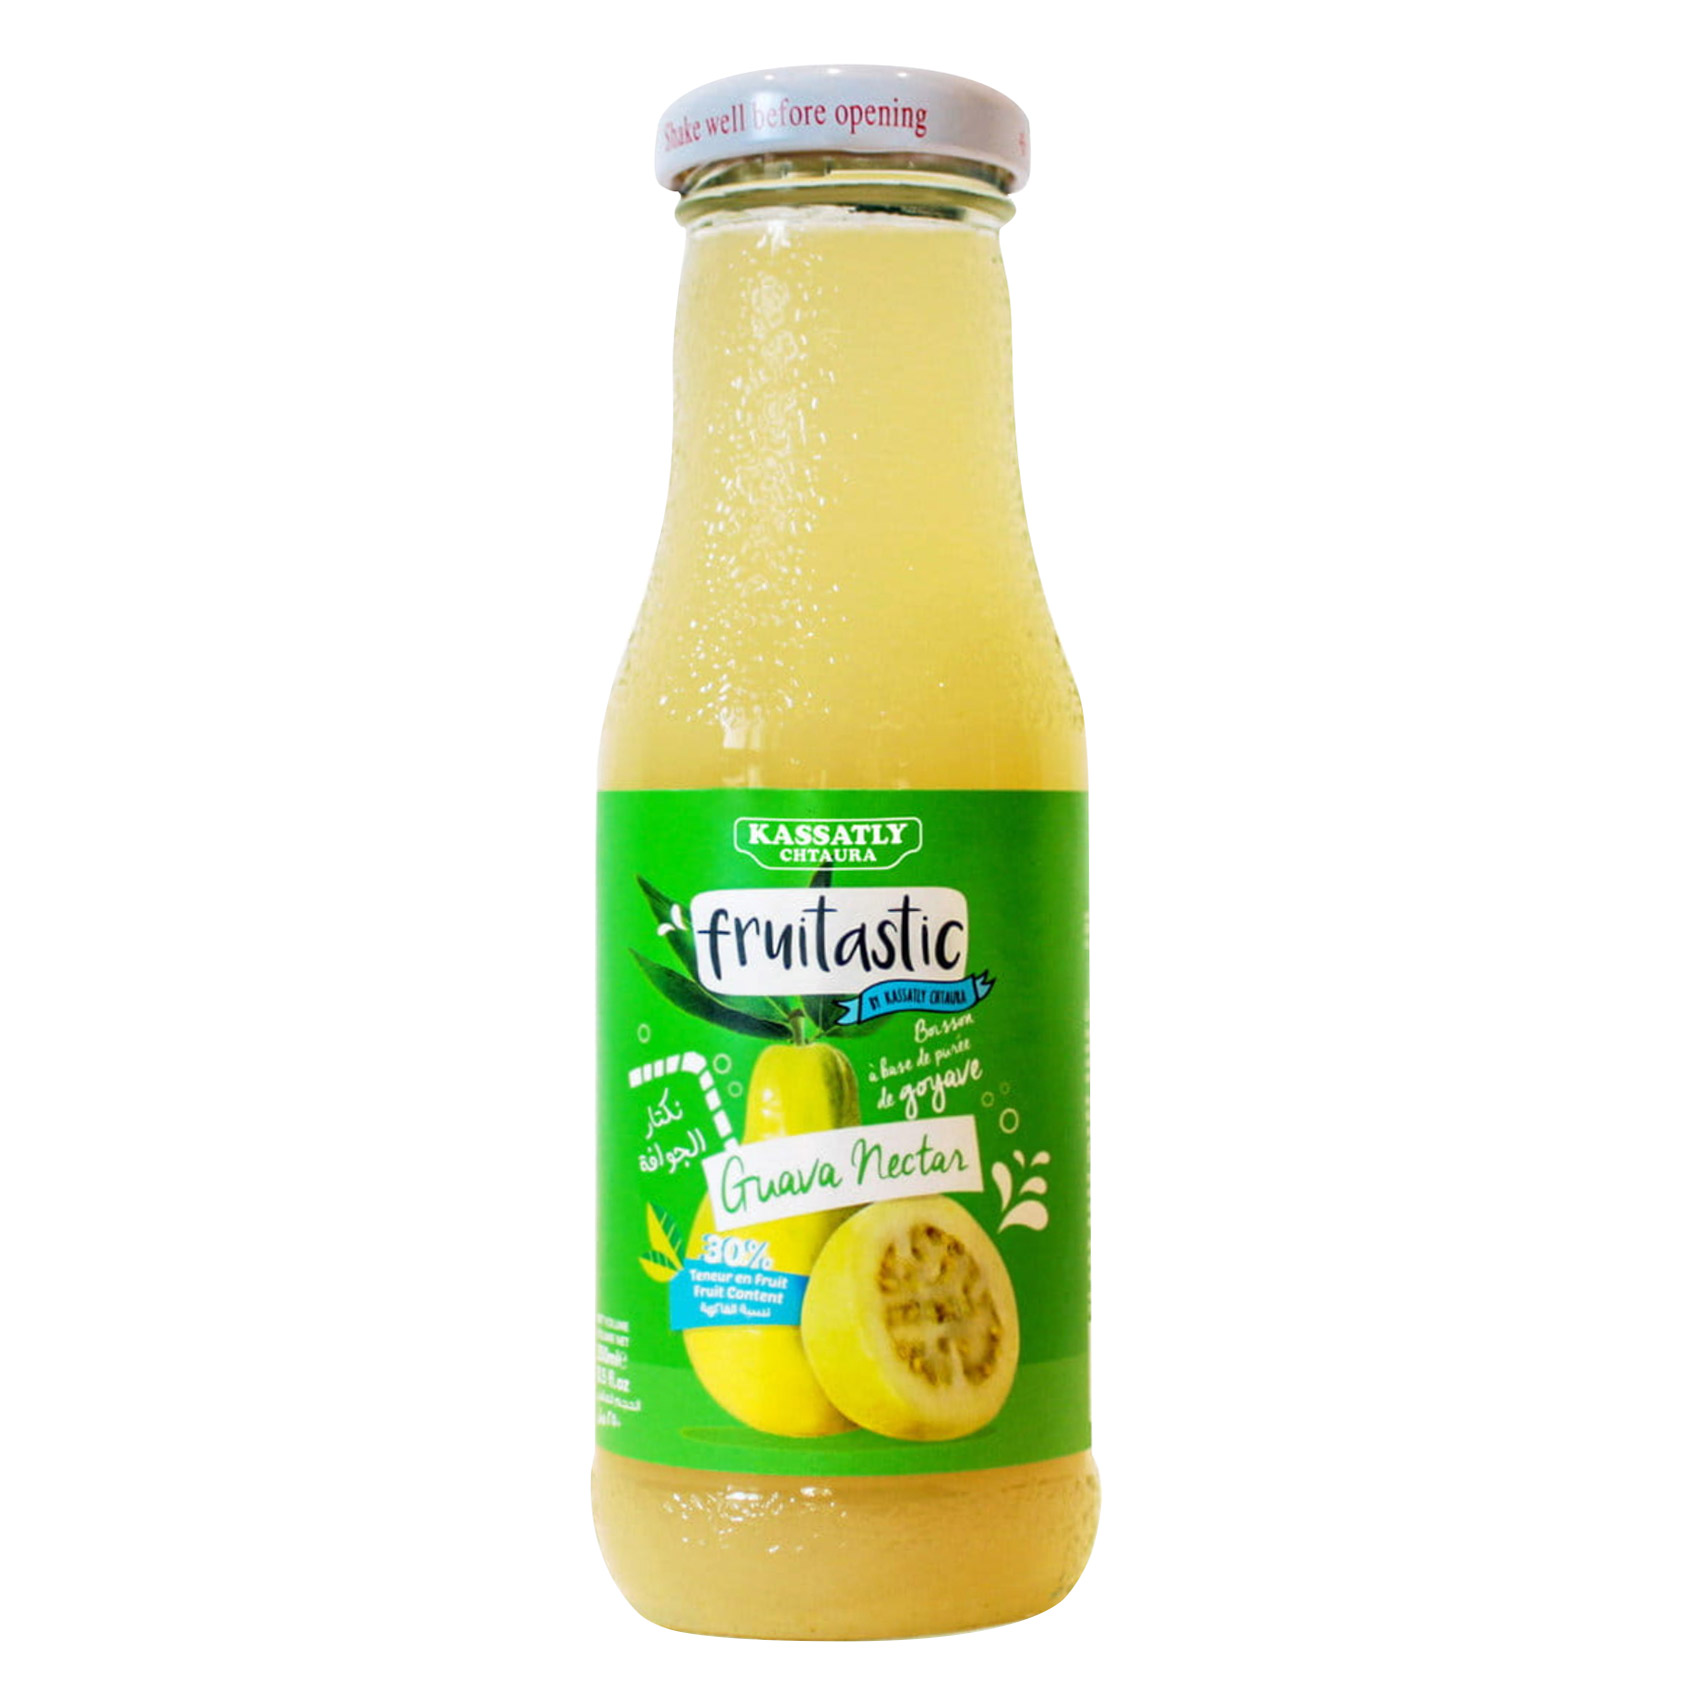 Kassatly Fruitastic Guava Nectar Fruit Juice 1L